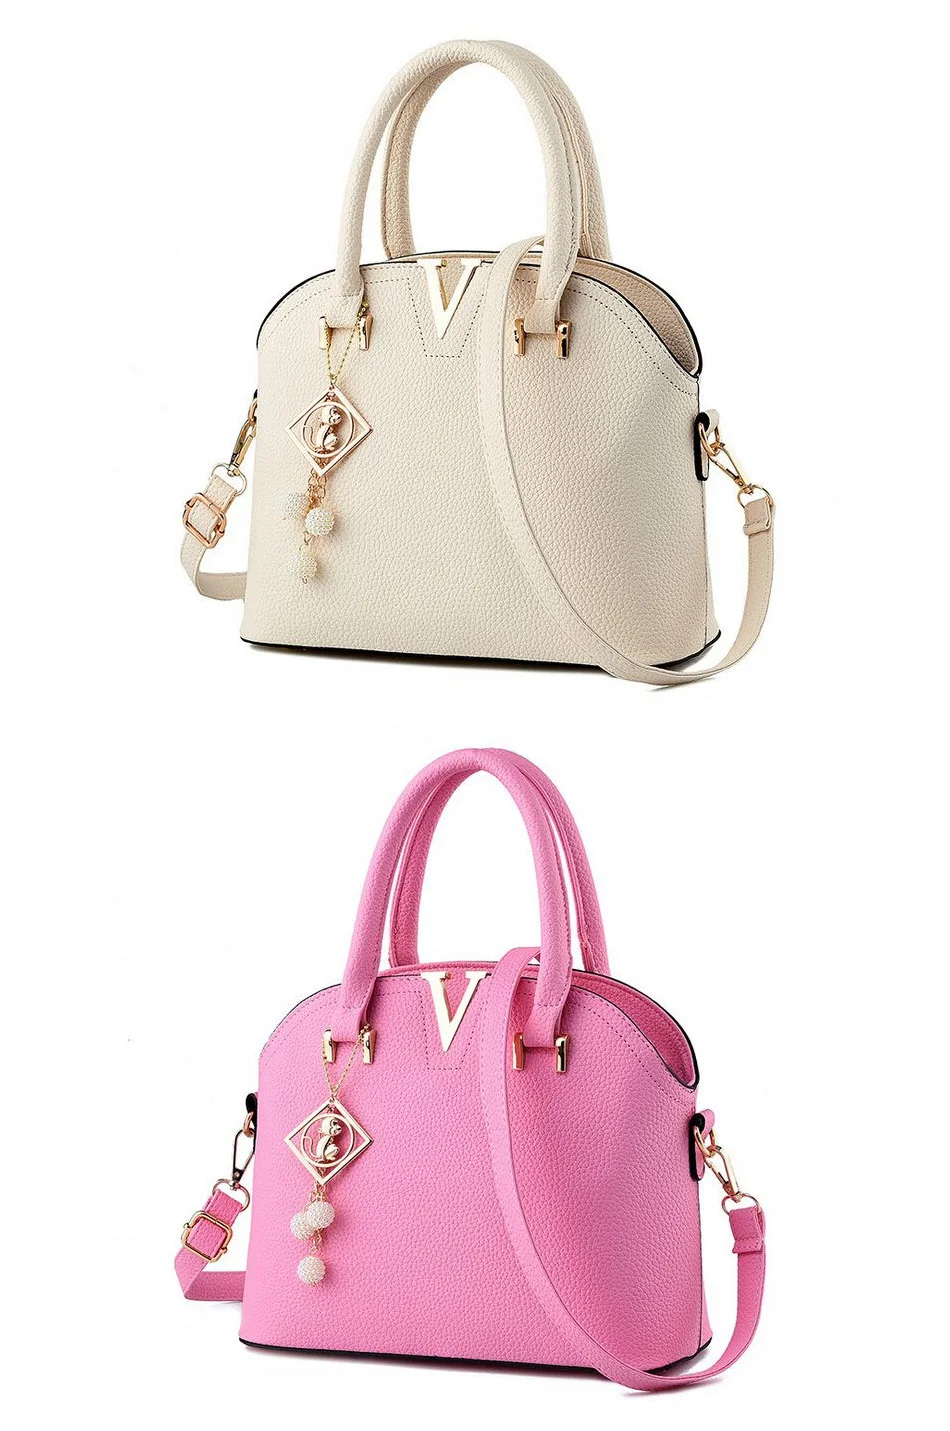 Vogue Star Для женщин кожа Сумки моды оболочки сумки письмо женские сумки сумка сумки на плечо bolsa LA10